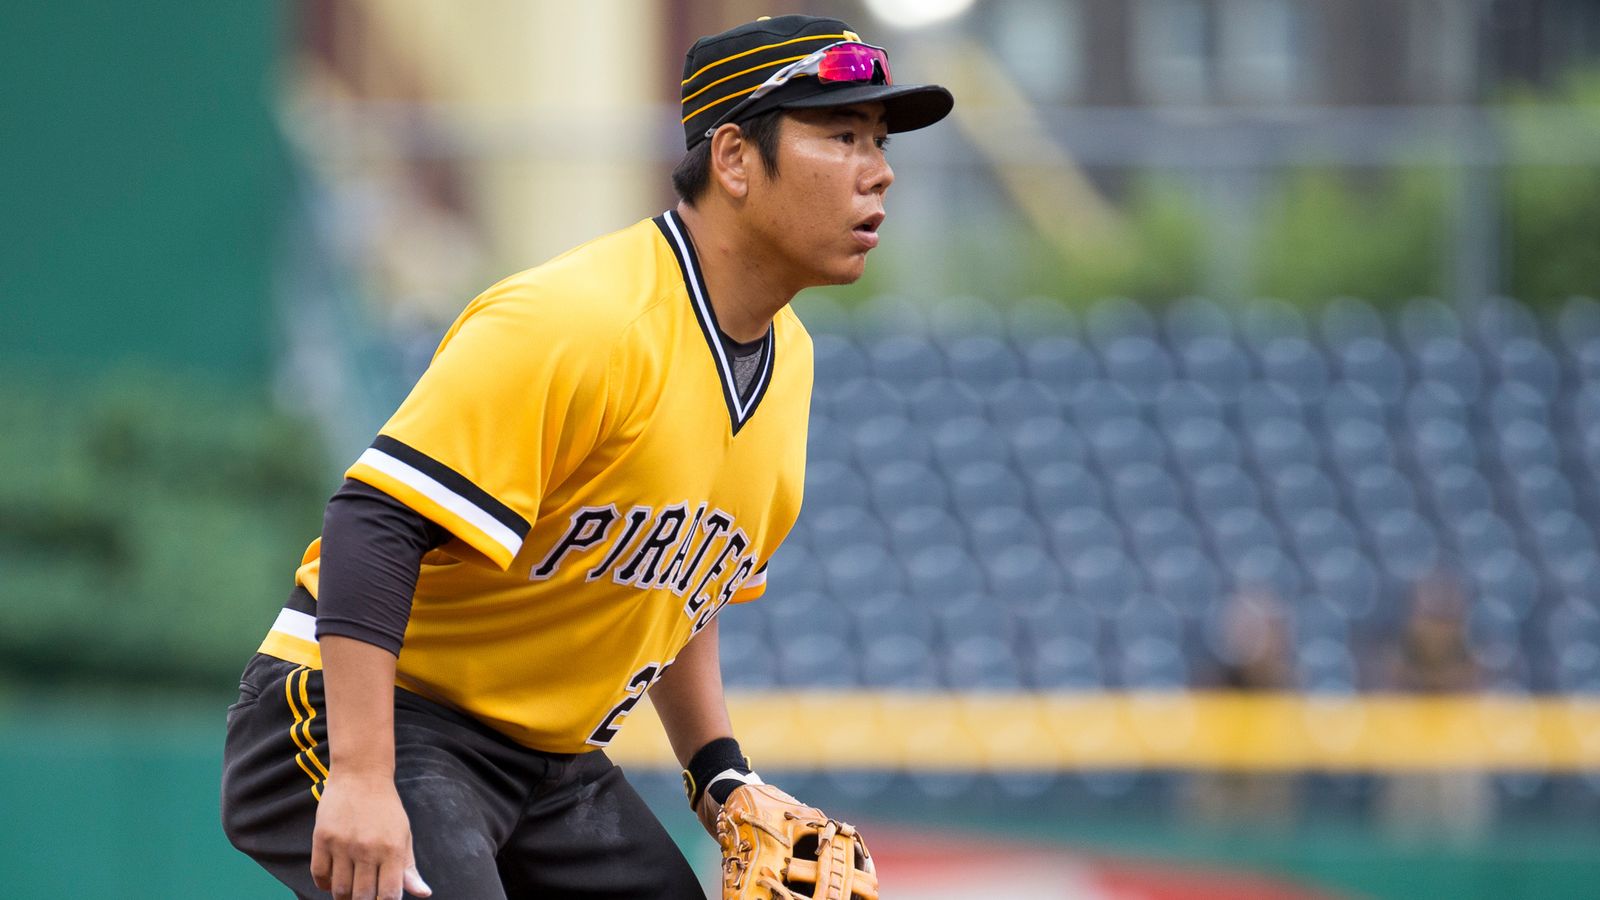 Pirates rookie Jung Ho Kang injured, out for season